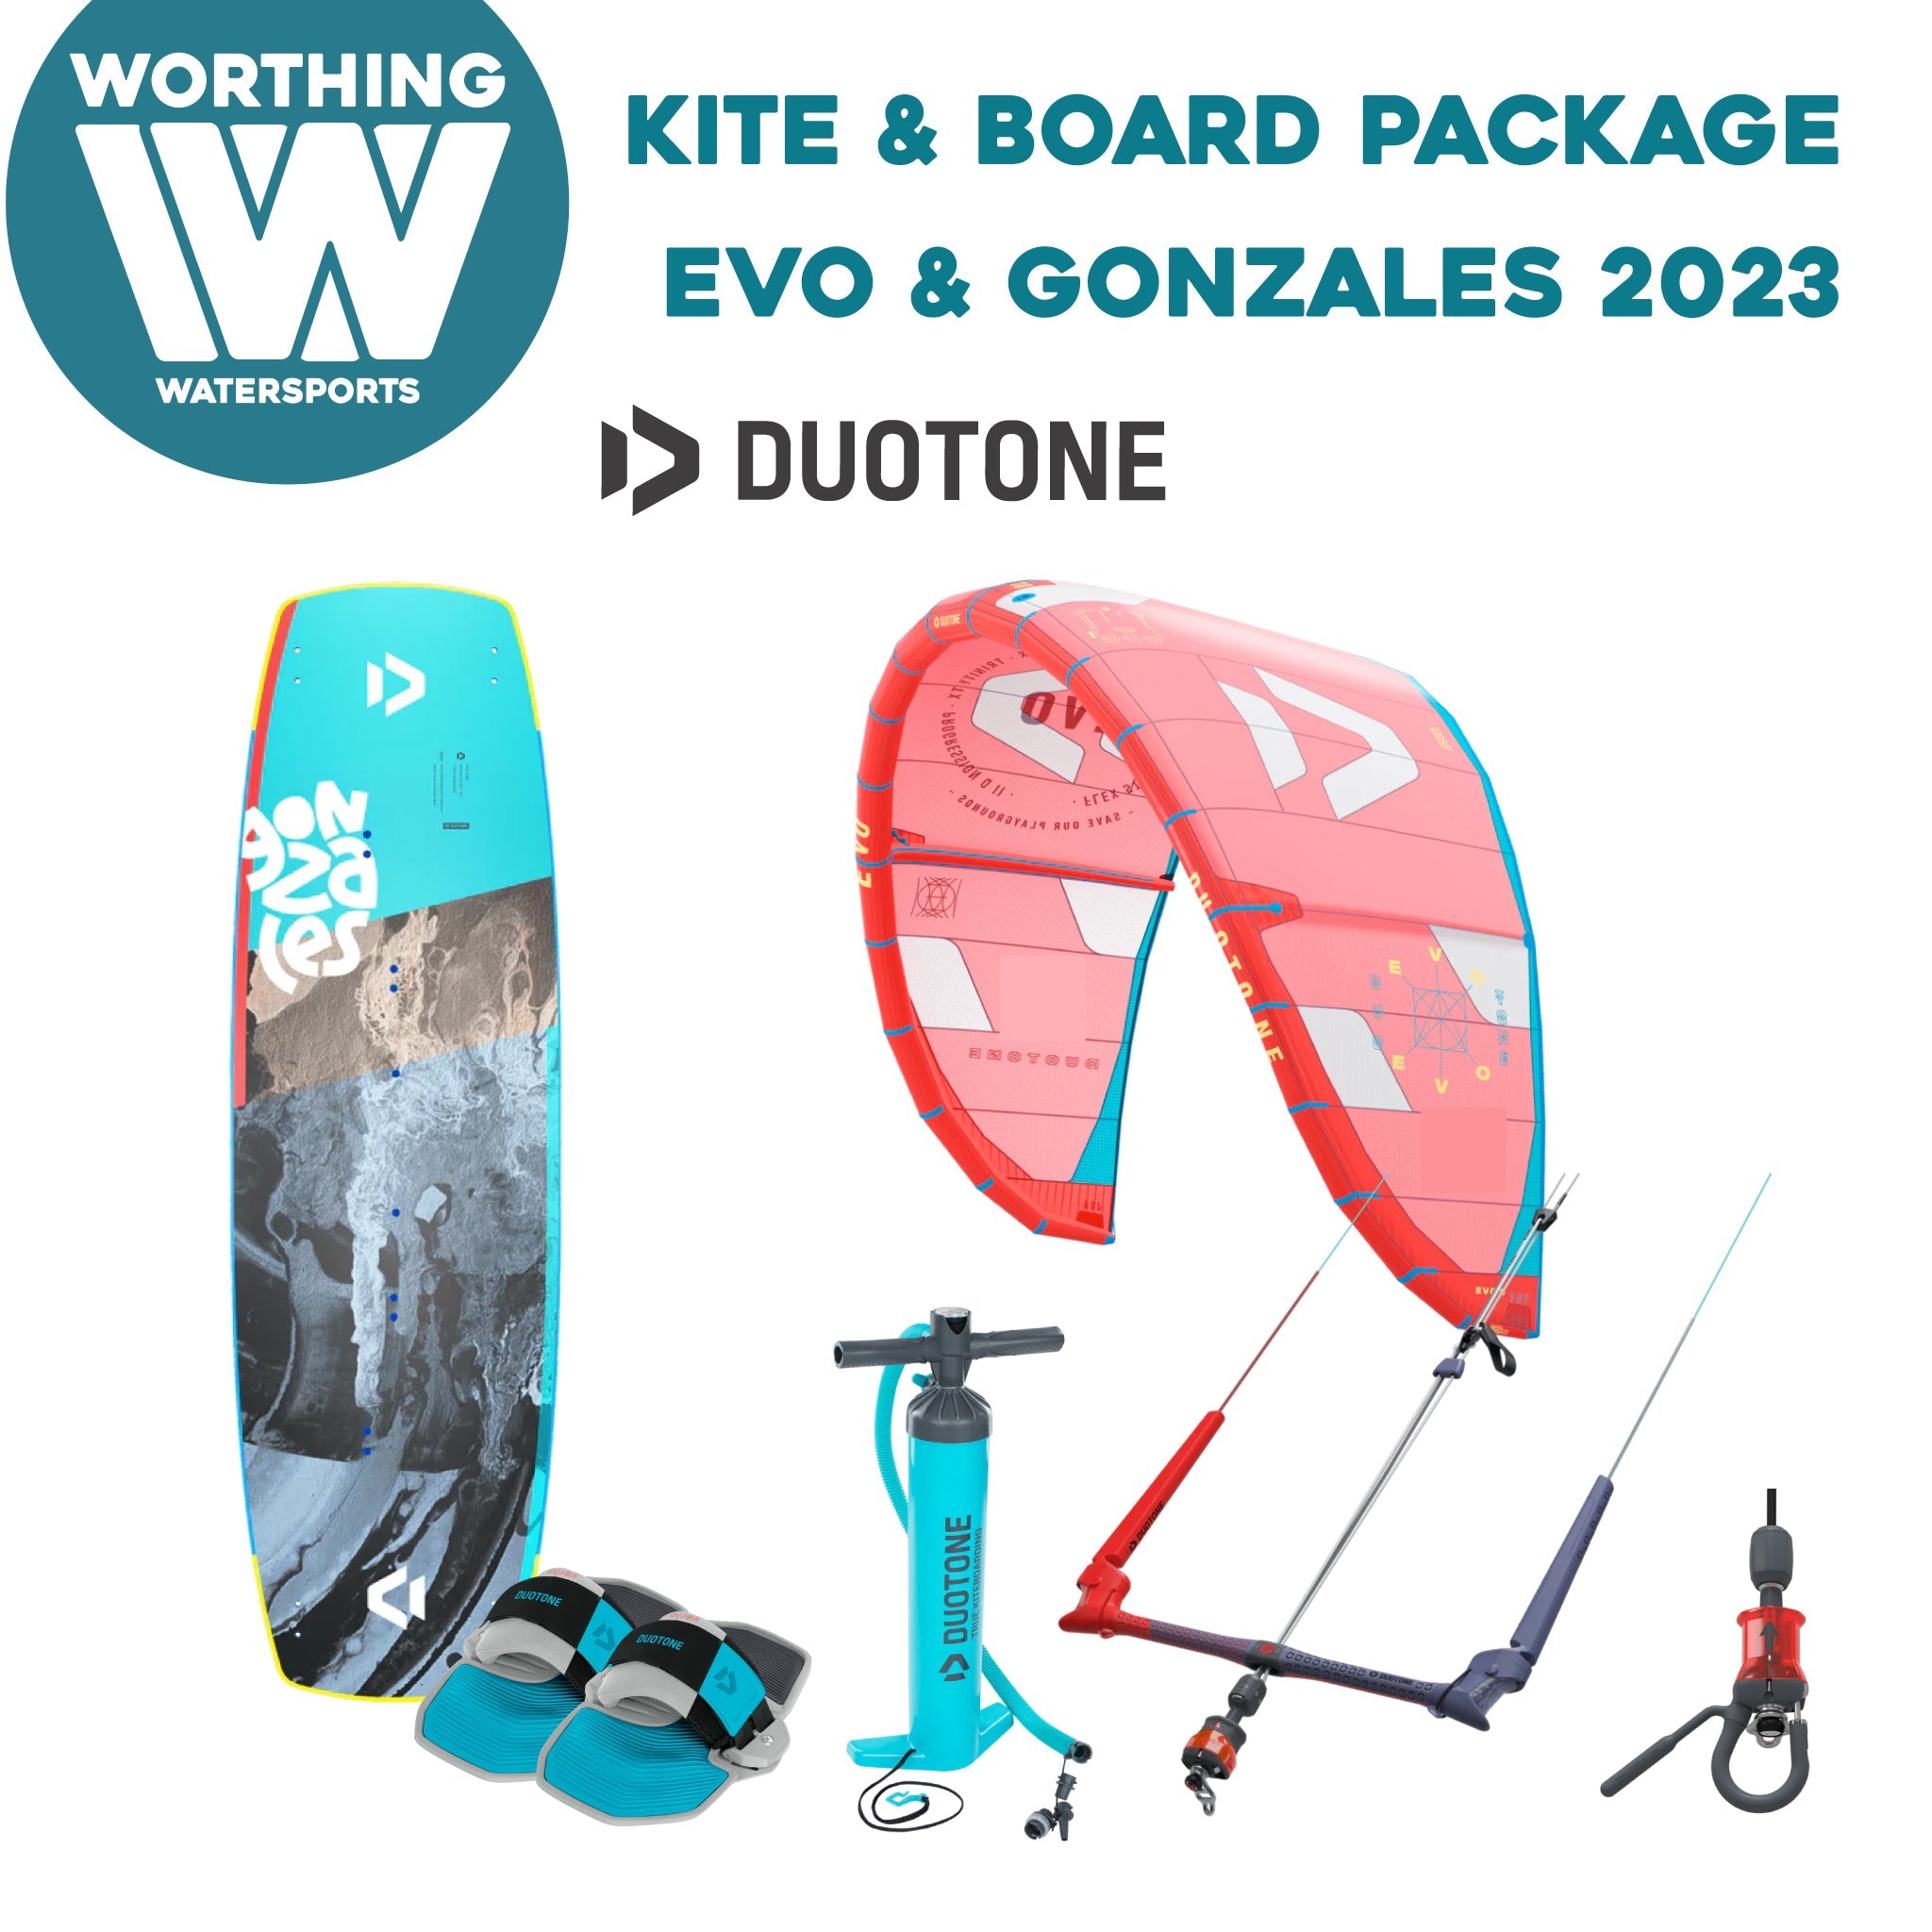 Duotone Evo Kite Gonzales Board Full Kitesurf Package 2023 - Worthing Watersports - Kites - Duotone Kiteboarding